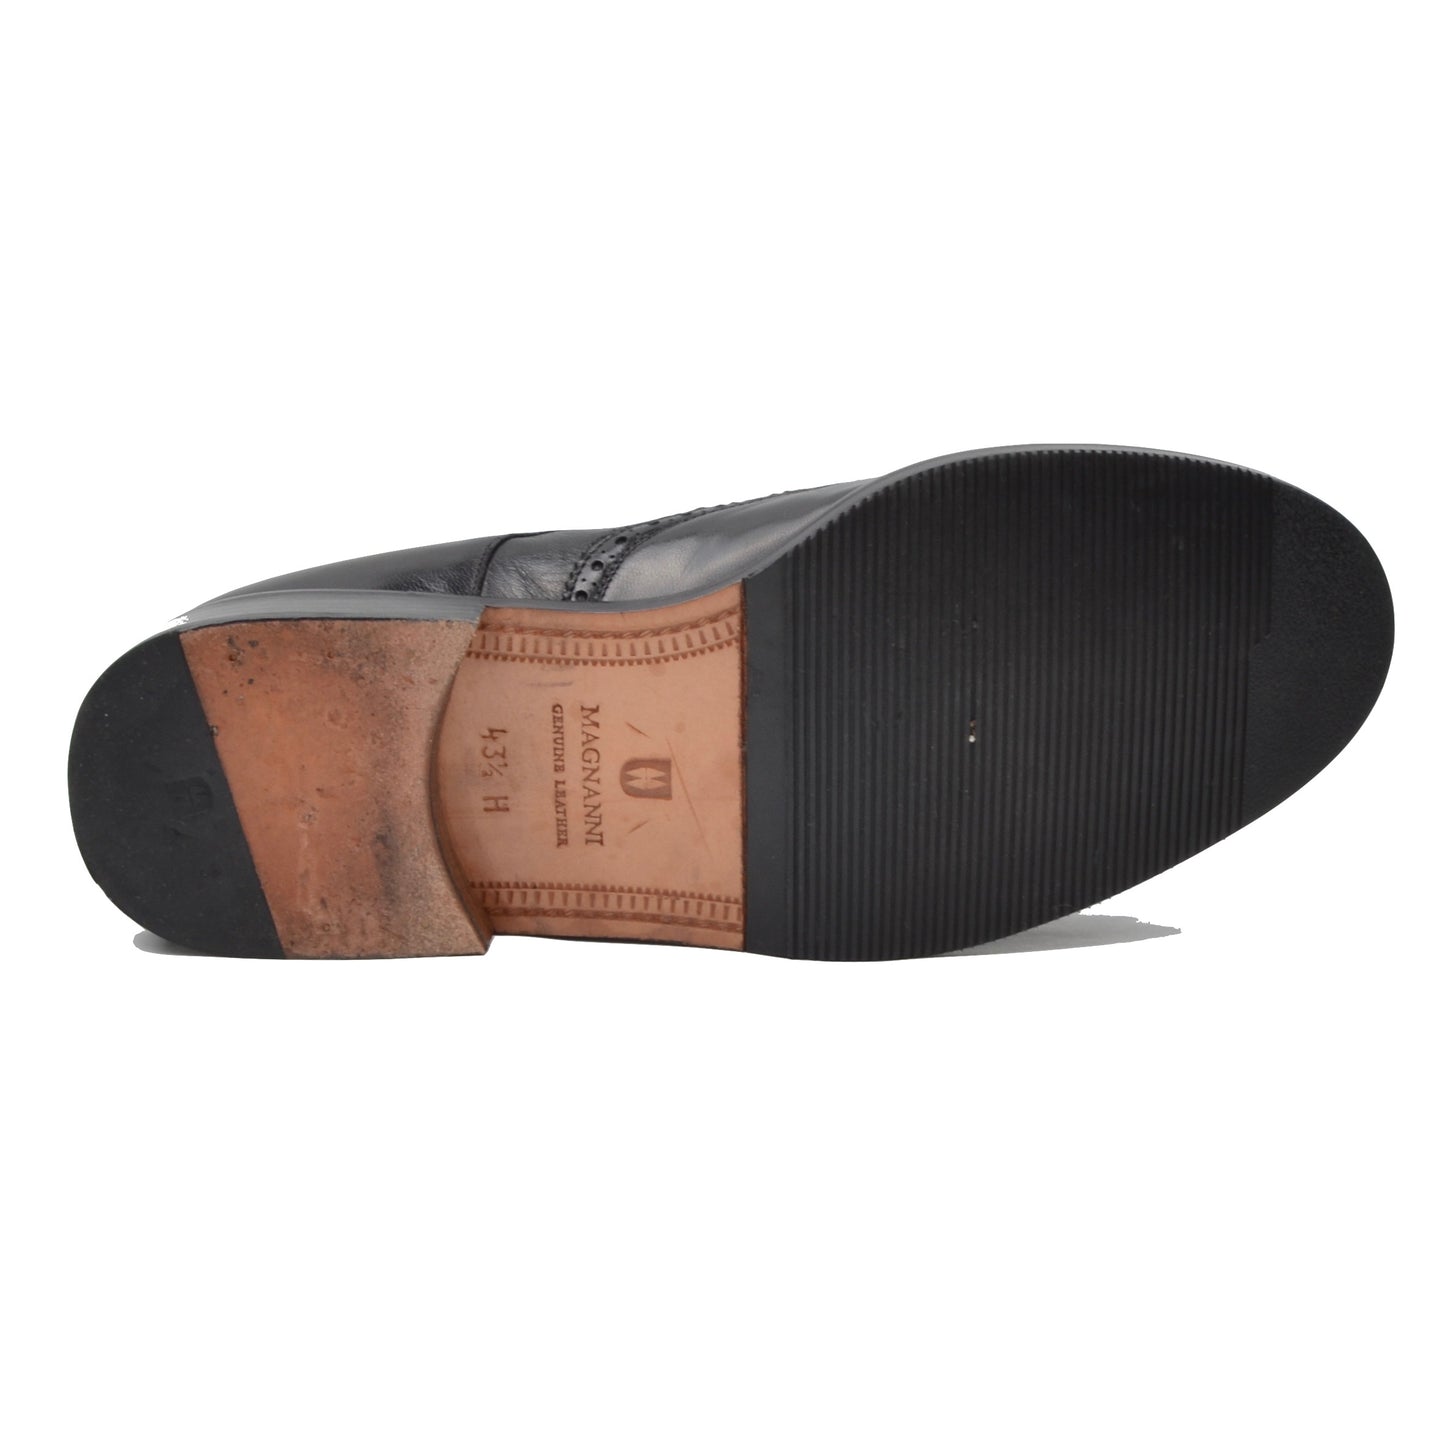 Magnanni Comfort Leather Shoes Size 43.5 H Wide - Black